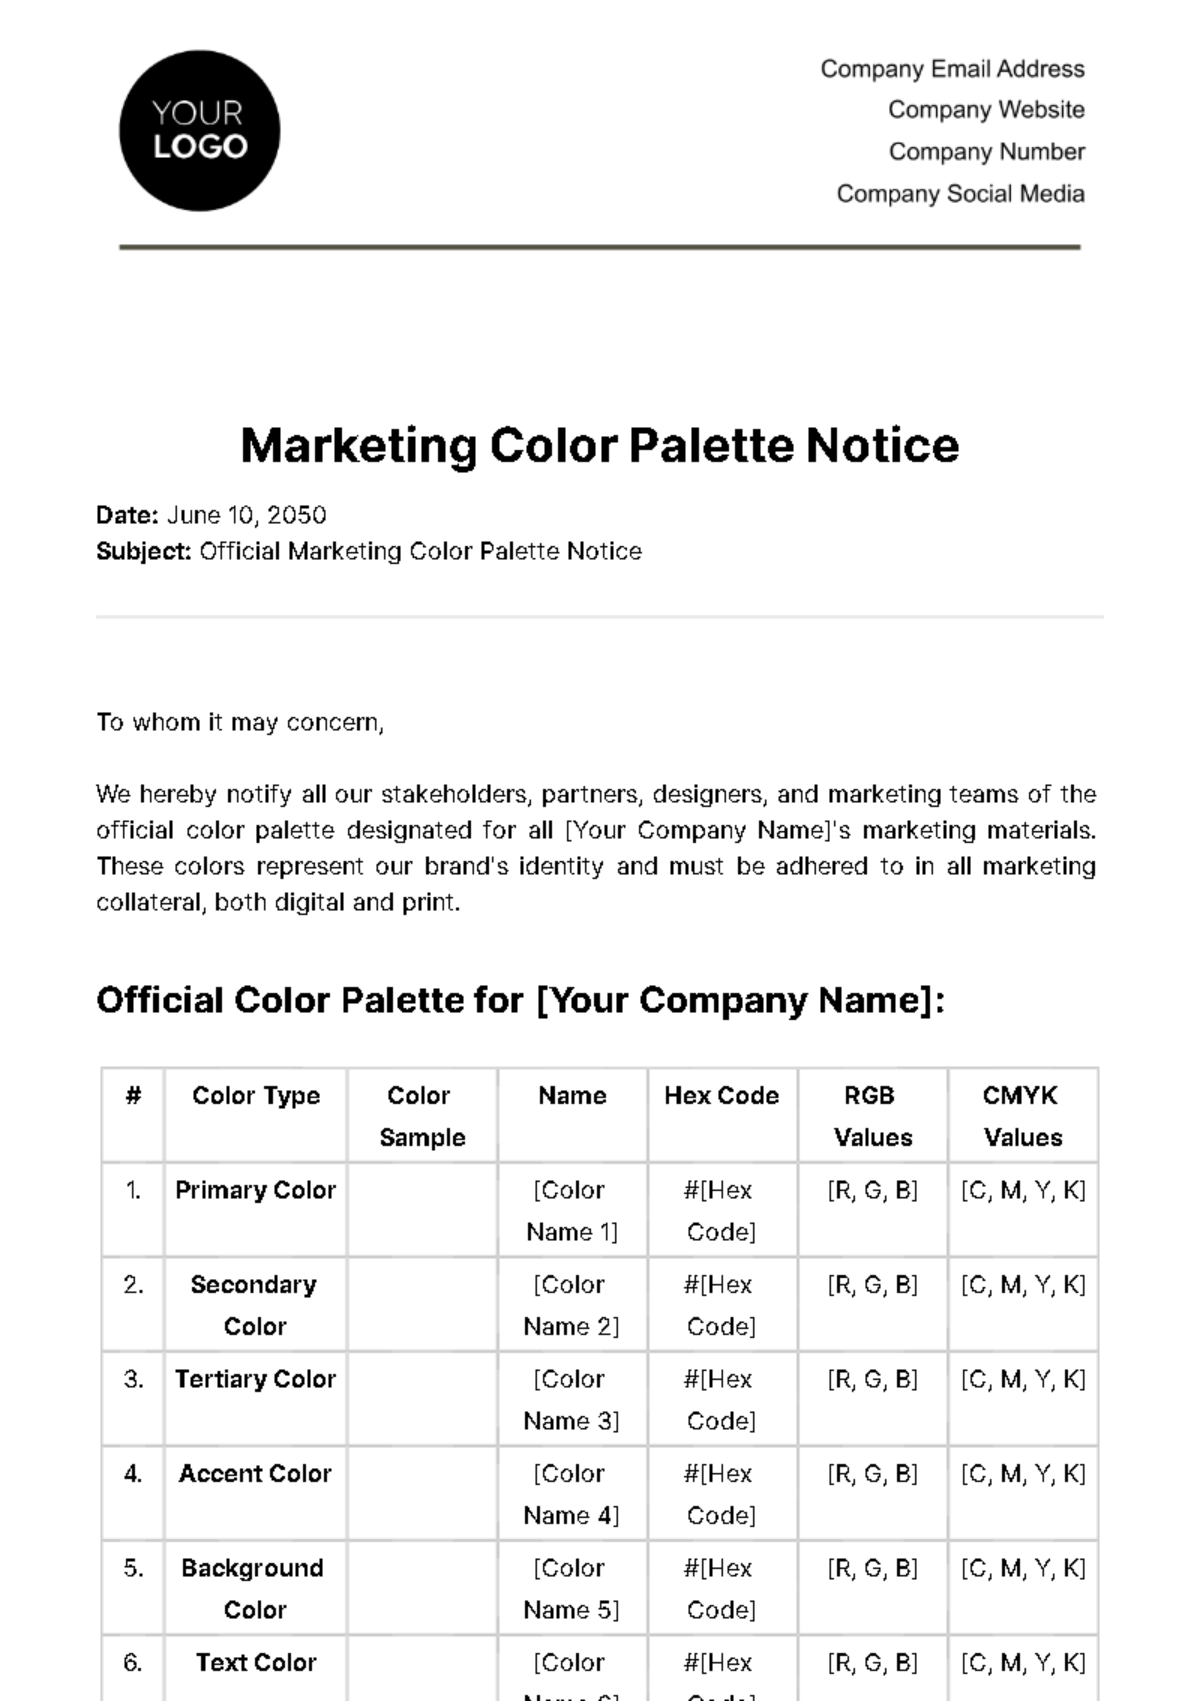 Marketing Color Palette Notice Template